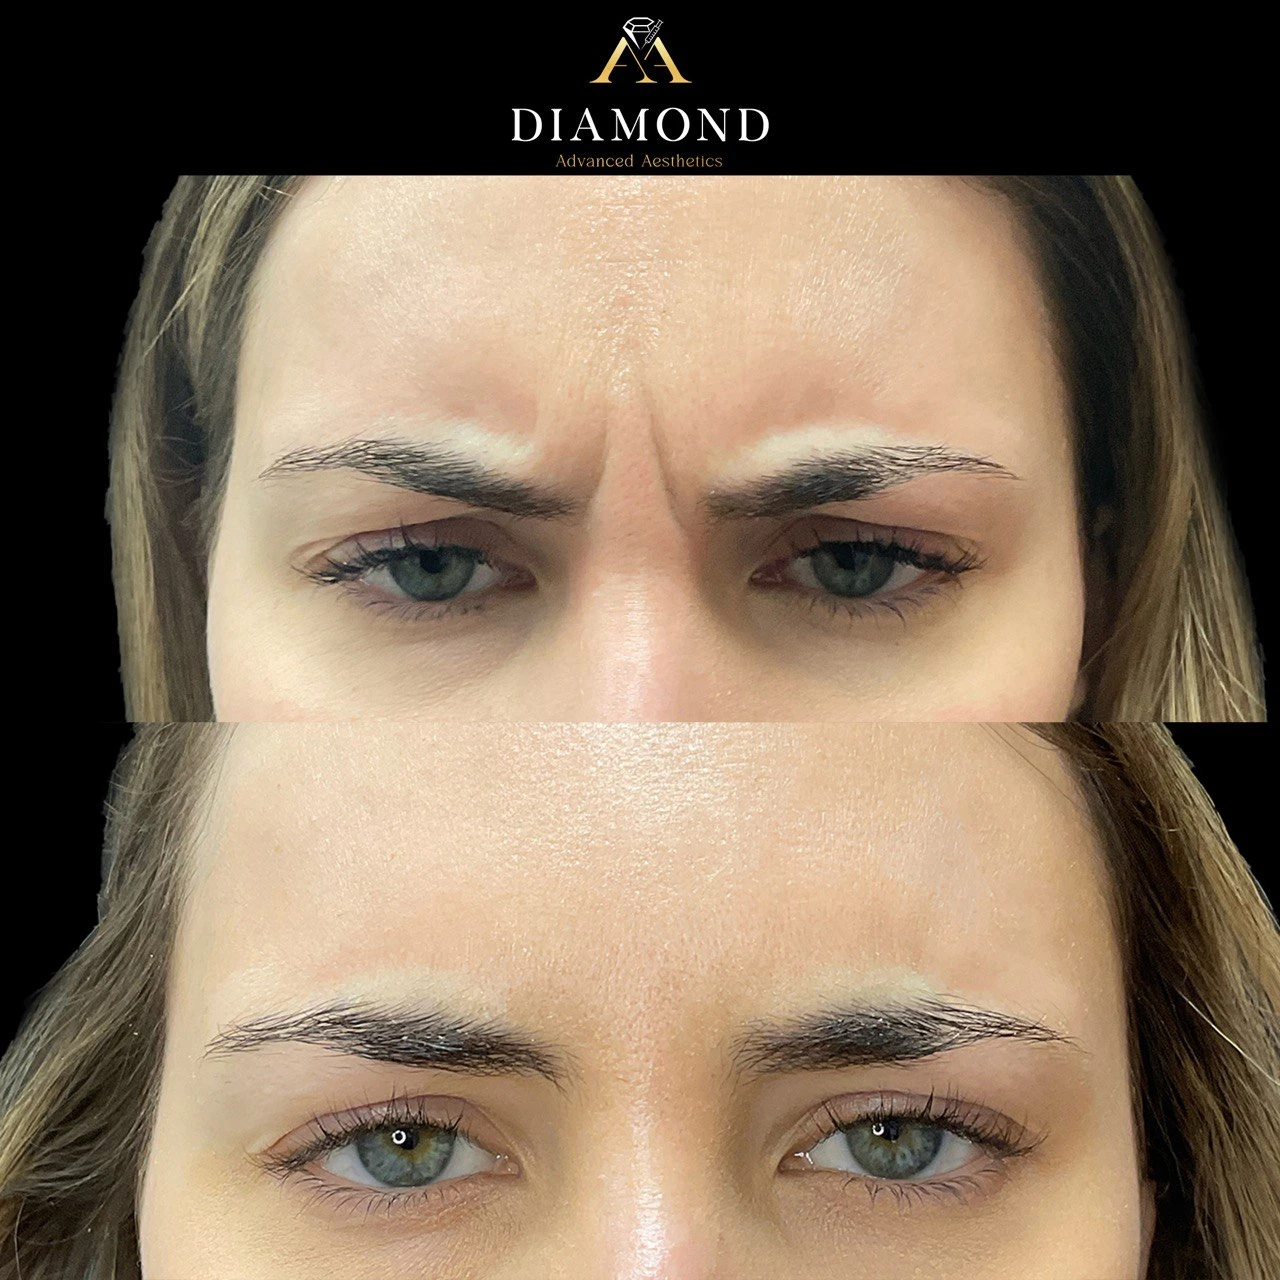 Forhead -After-before |diamond advanced aesthetics | New york|